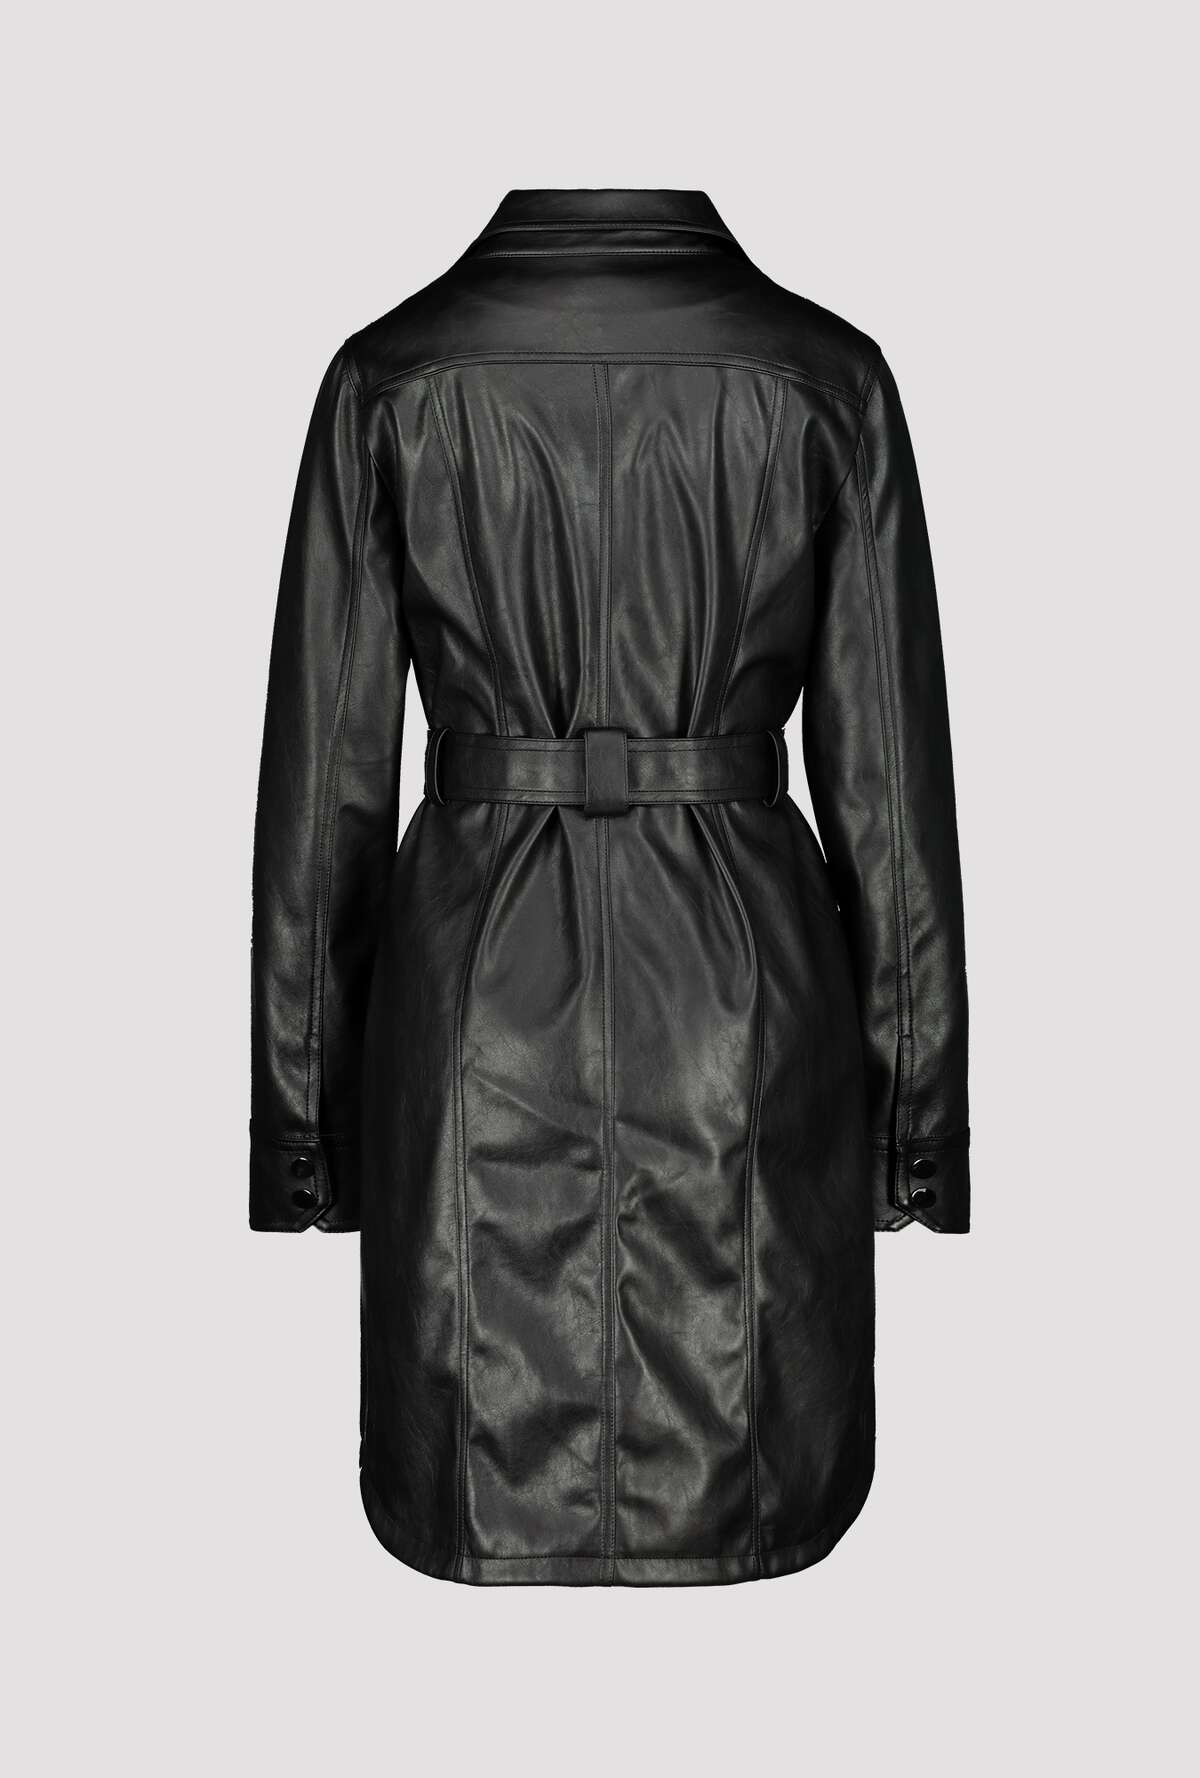 Monari Indoor Lederimitat Mantel mit aufgesetzten Taschen | mode weber